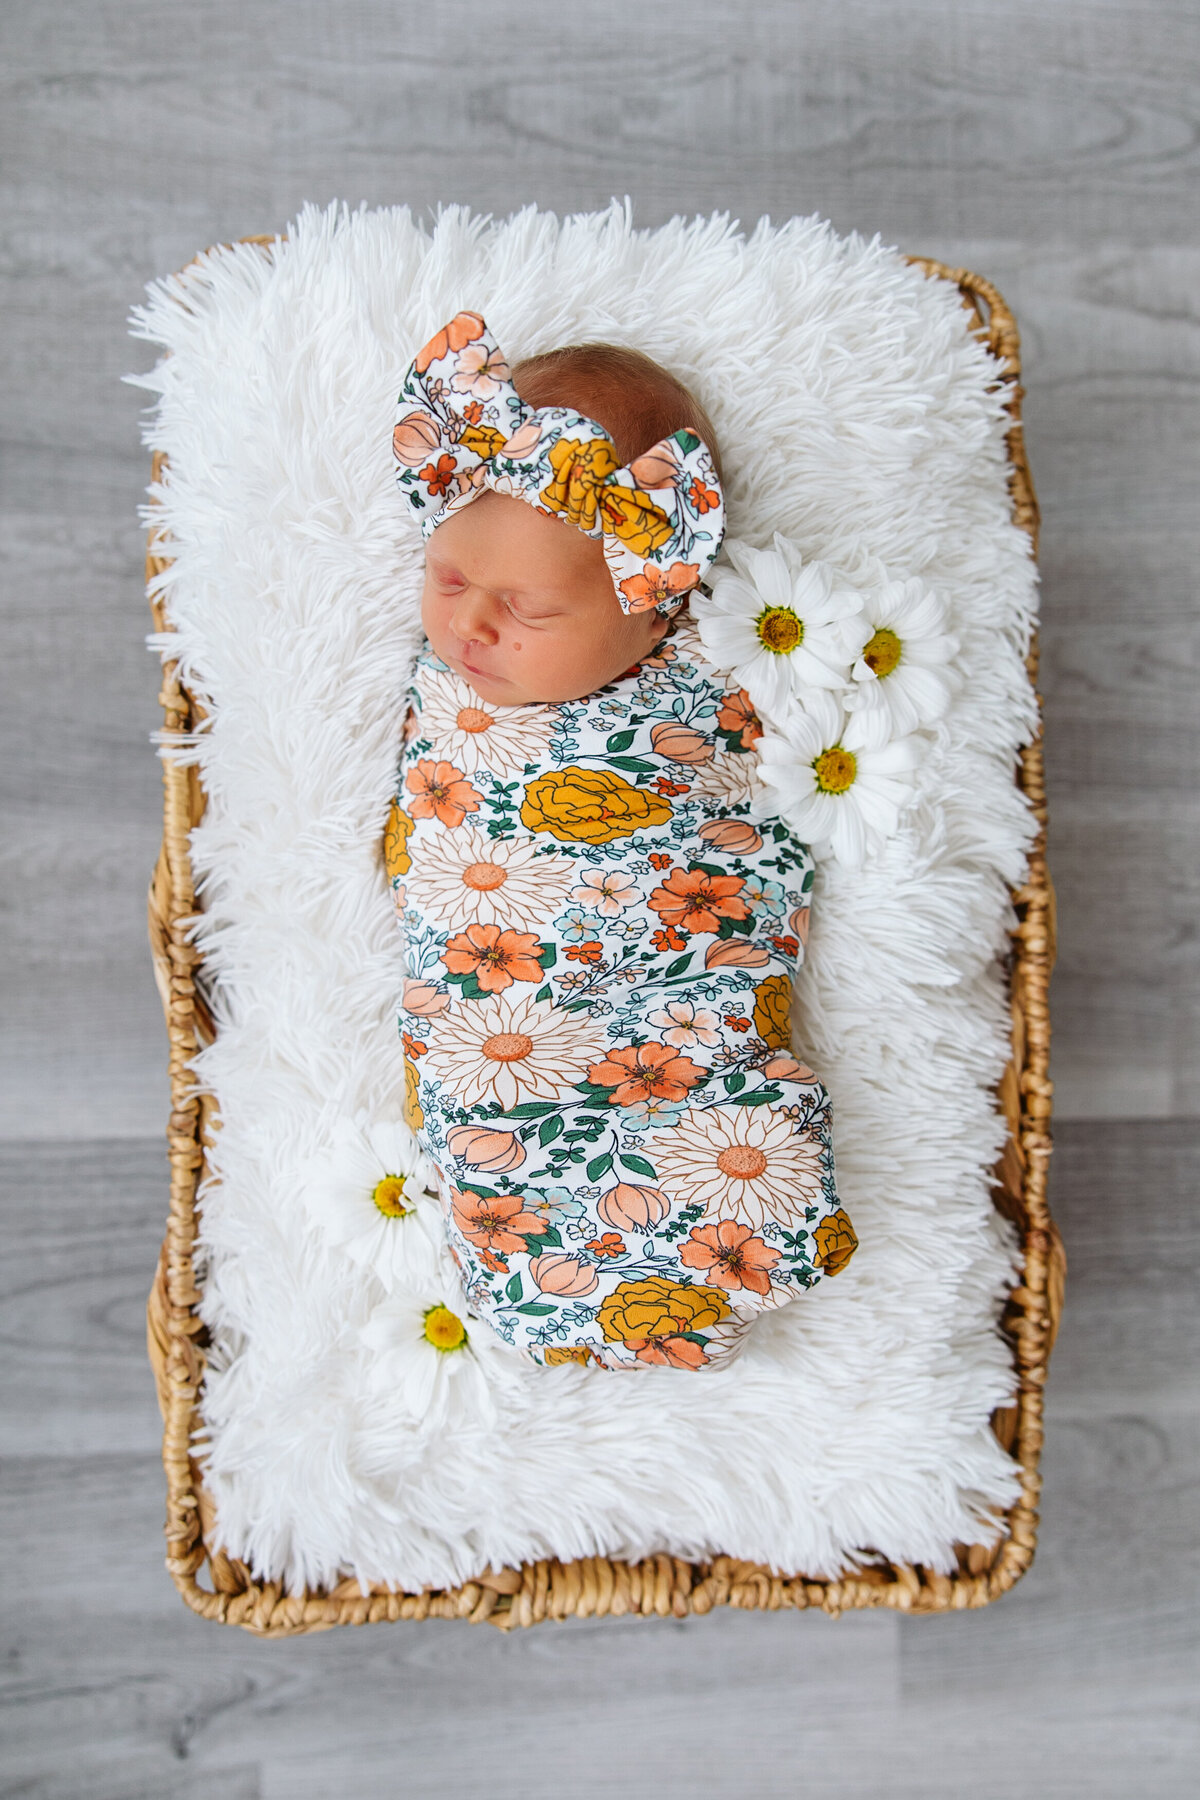 Minnesota-Alyssa Ashley Photography-Christensen newborn session-3